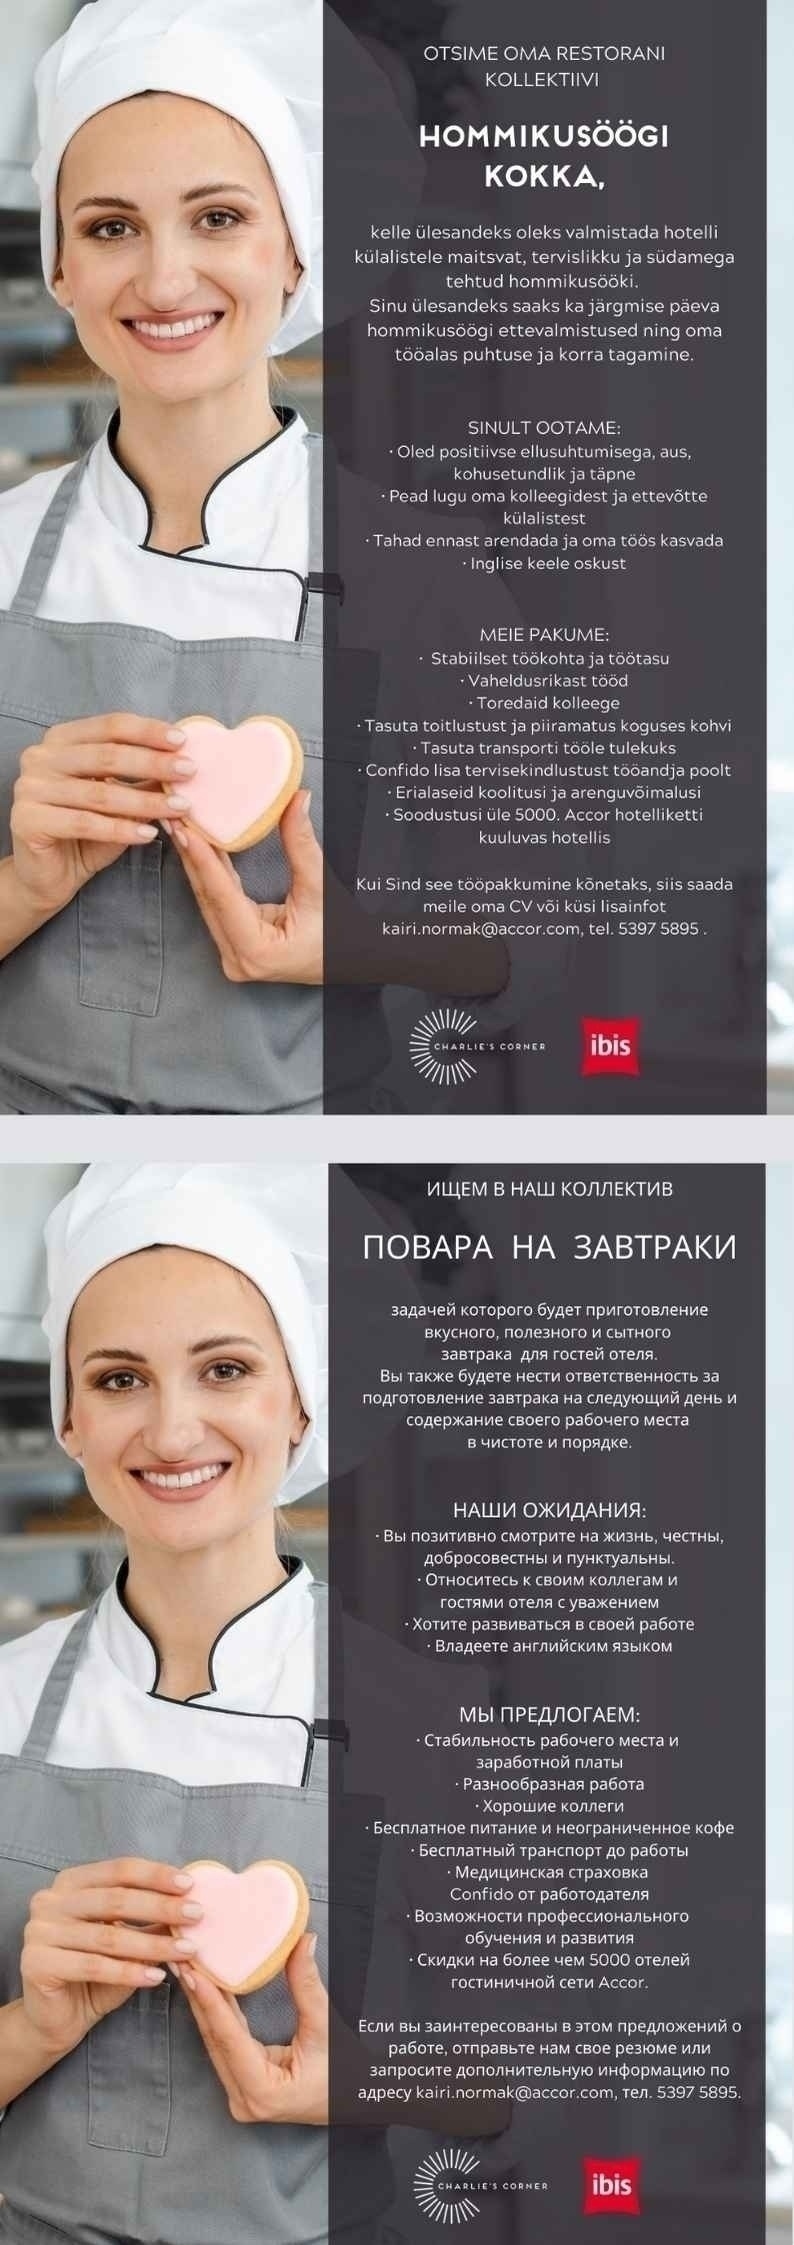 Juhkentali Hotel OÜ Hommikusöögi kokk / Повар на завтраки